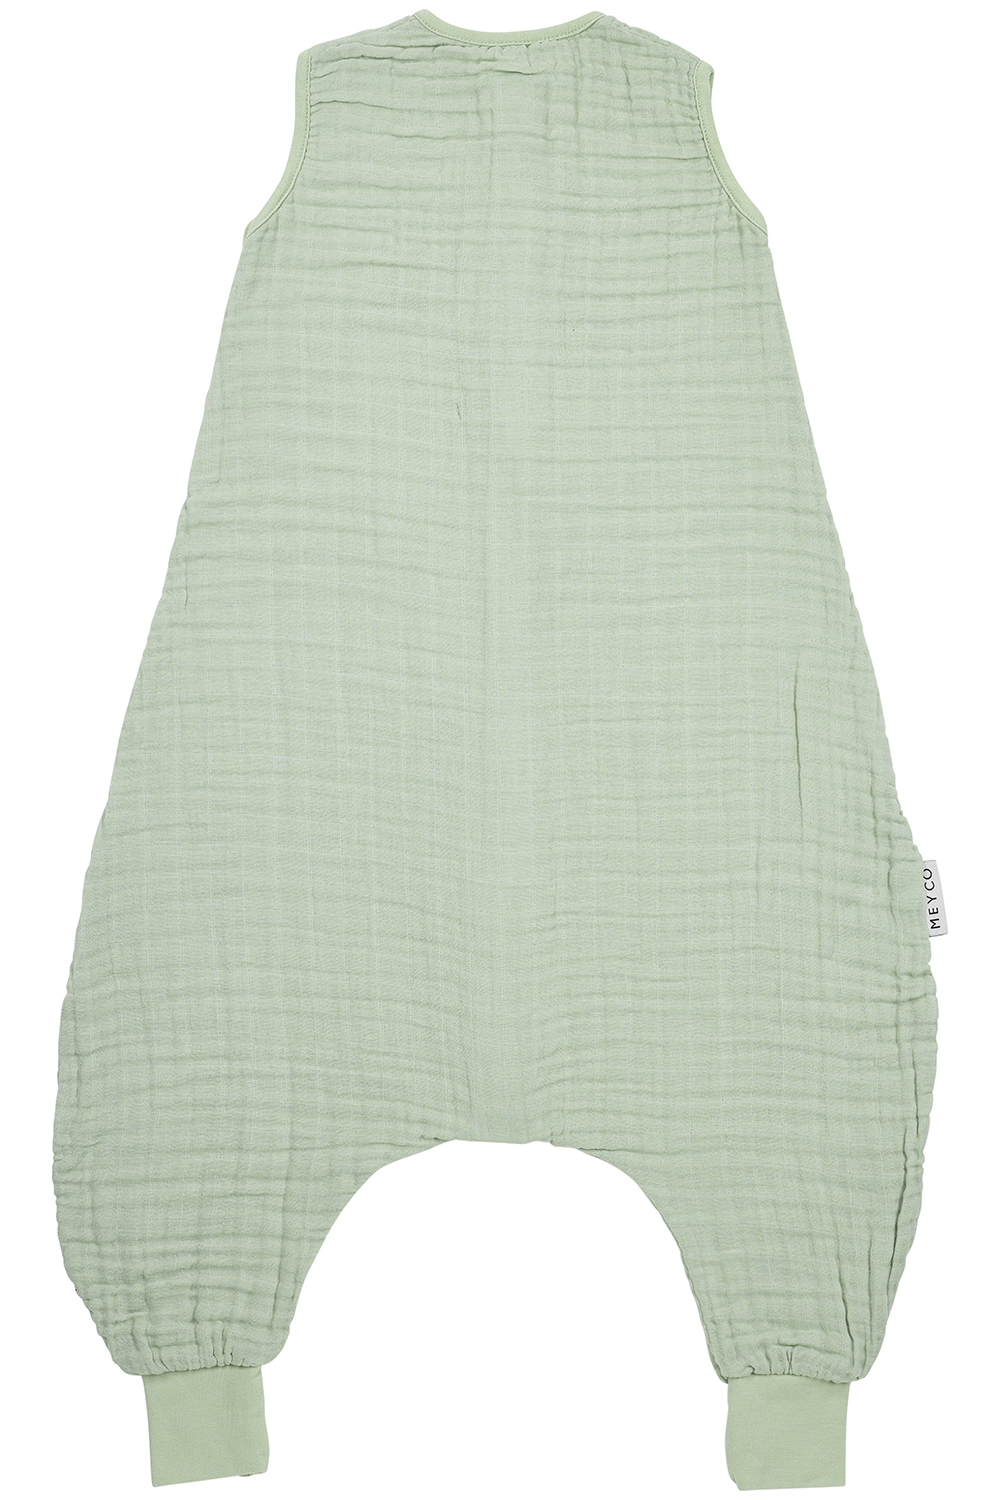 Baby summer sleep overall jumper pre-washed muslin Uni - soft green - 92cm